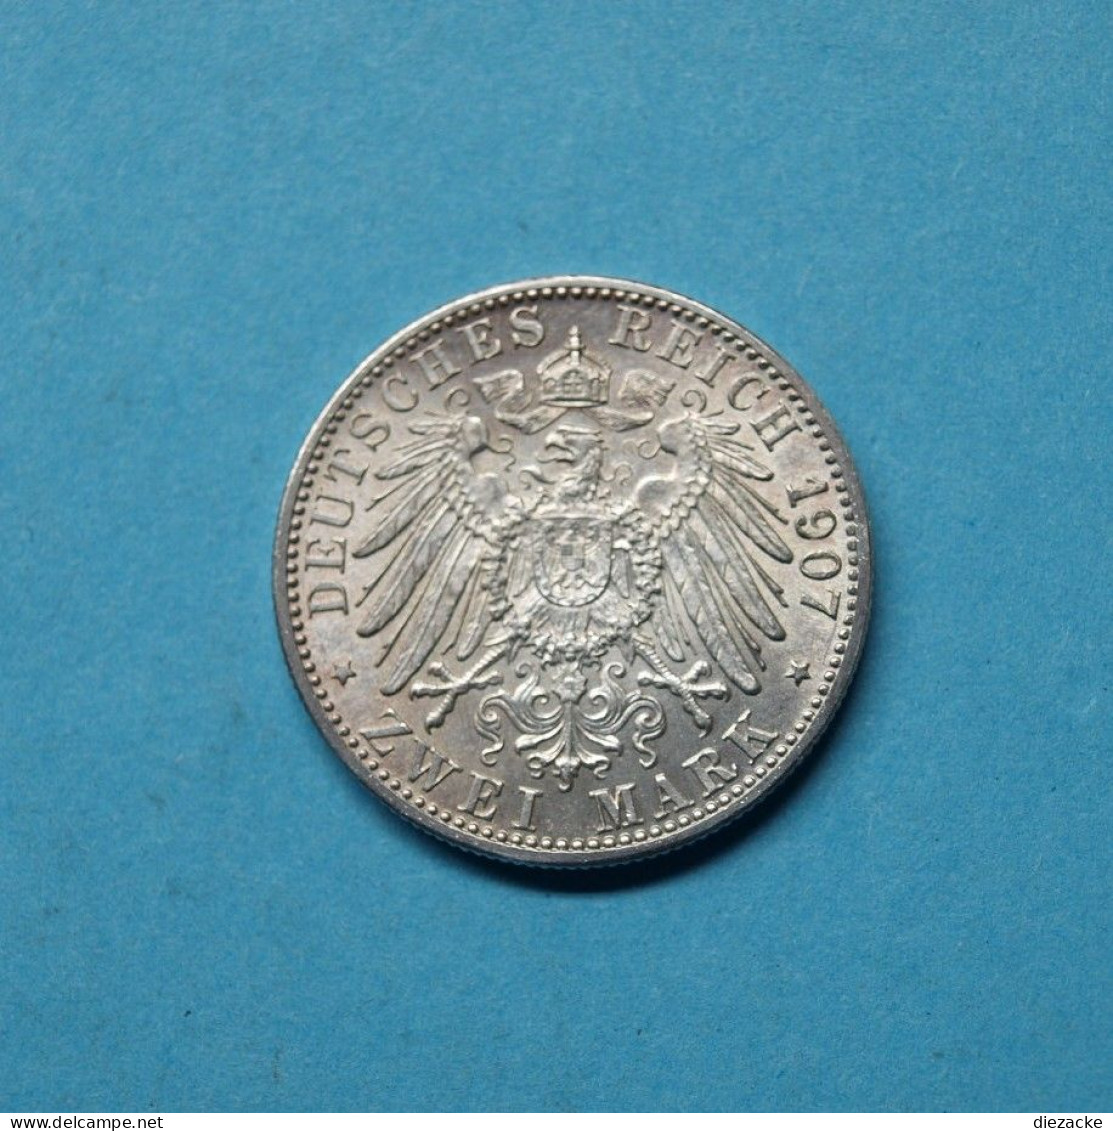 Baden 1907 2 Mark Friedrich I. ST (EM627 - 2, 3 & 5 Mark Silver